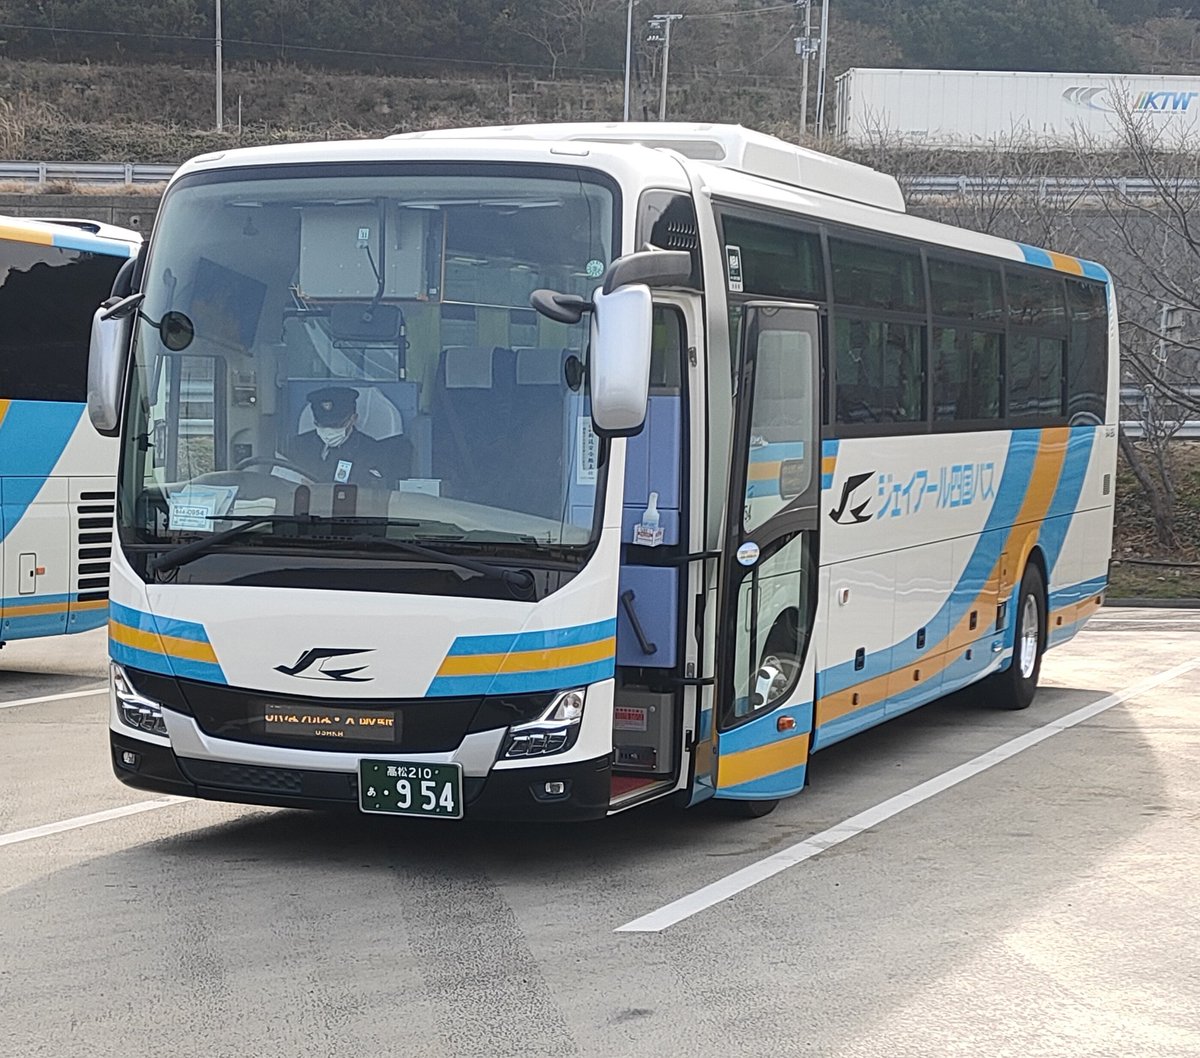 Jr 四国 バス